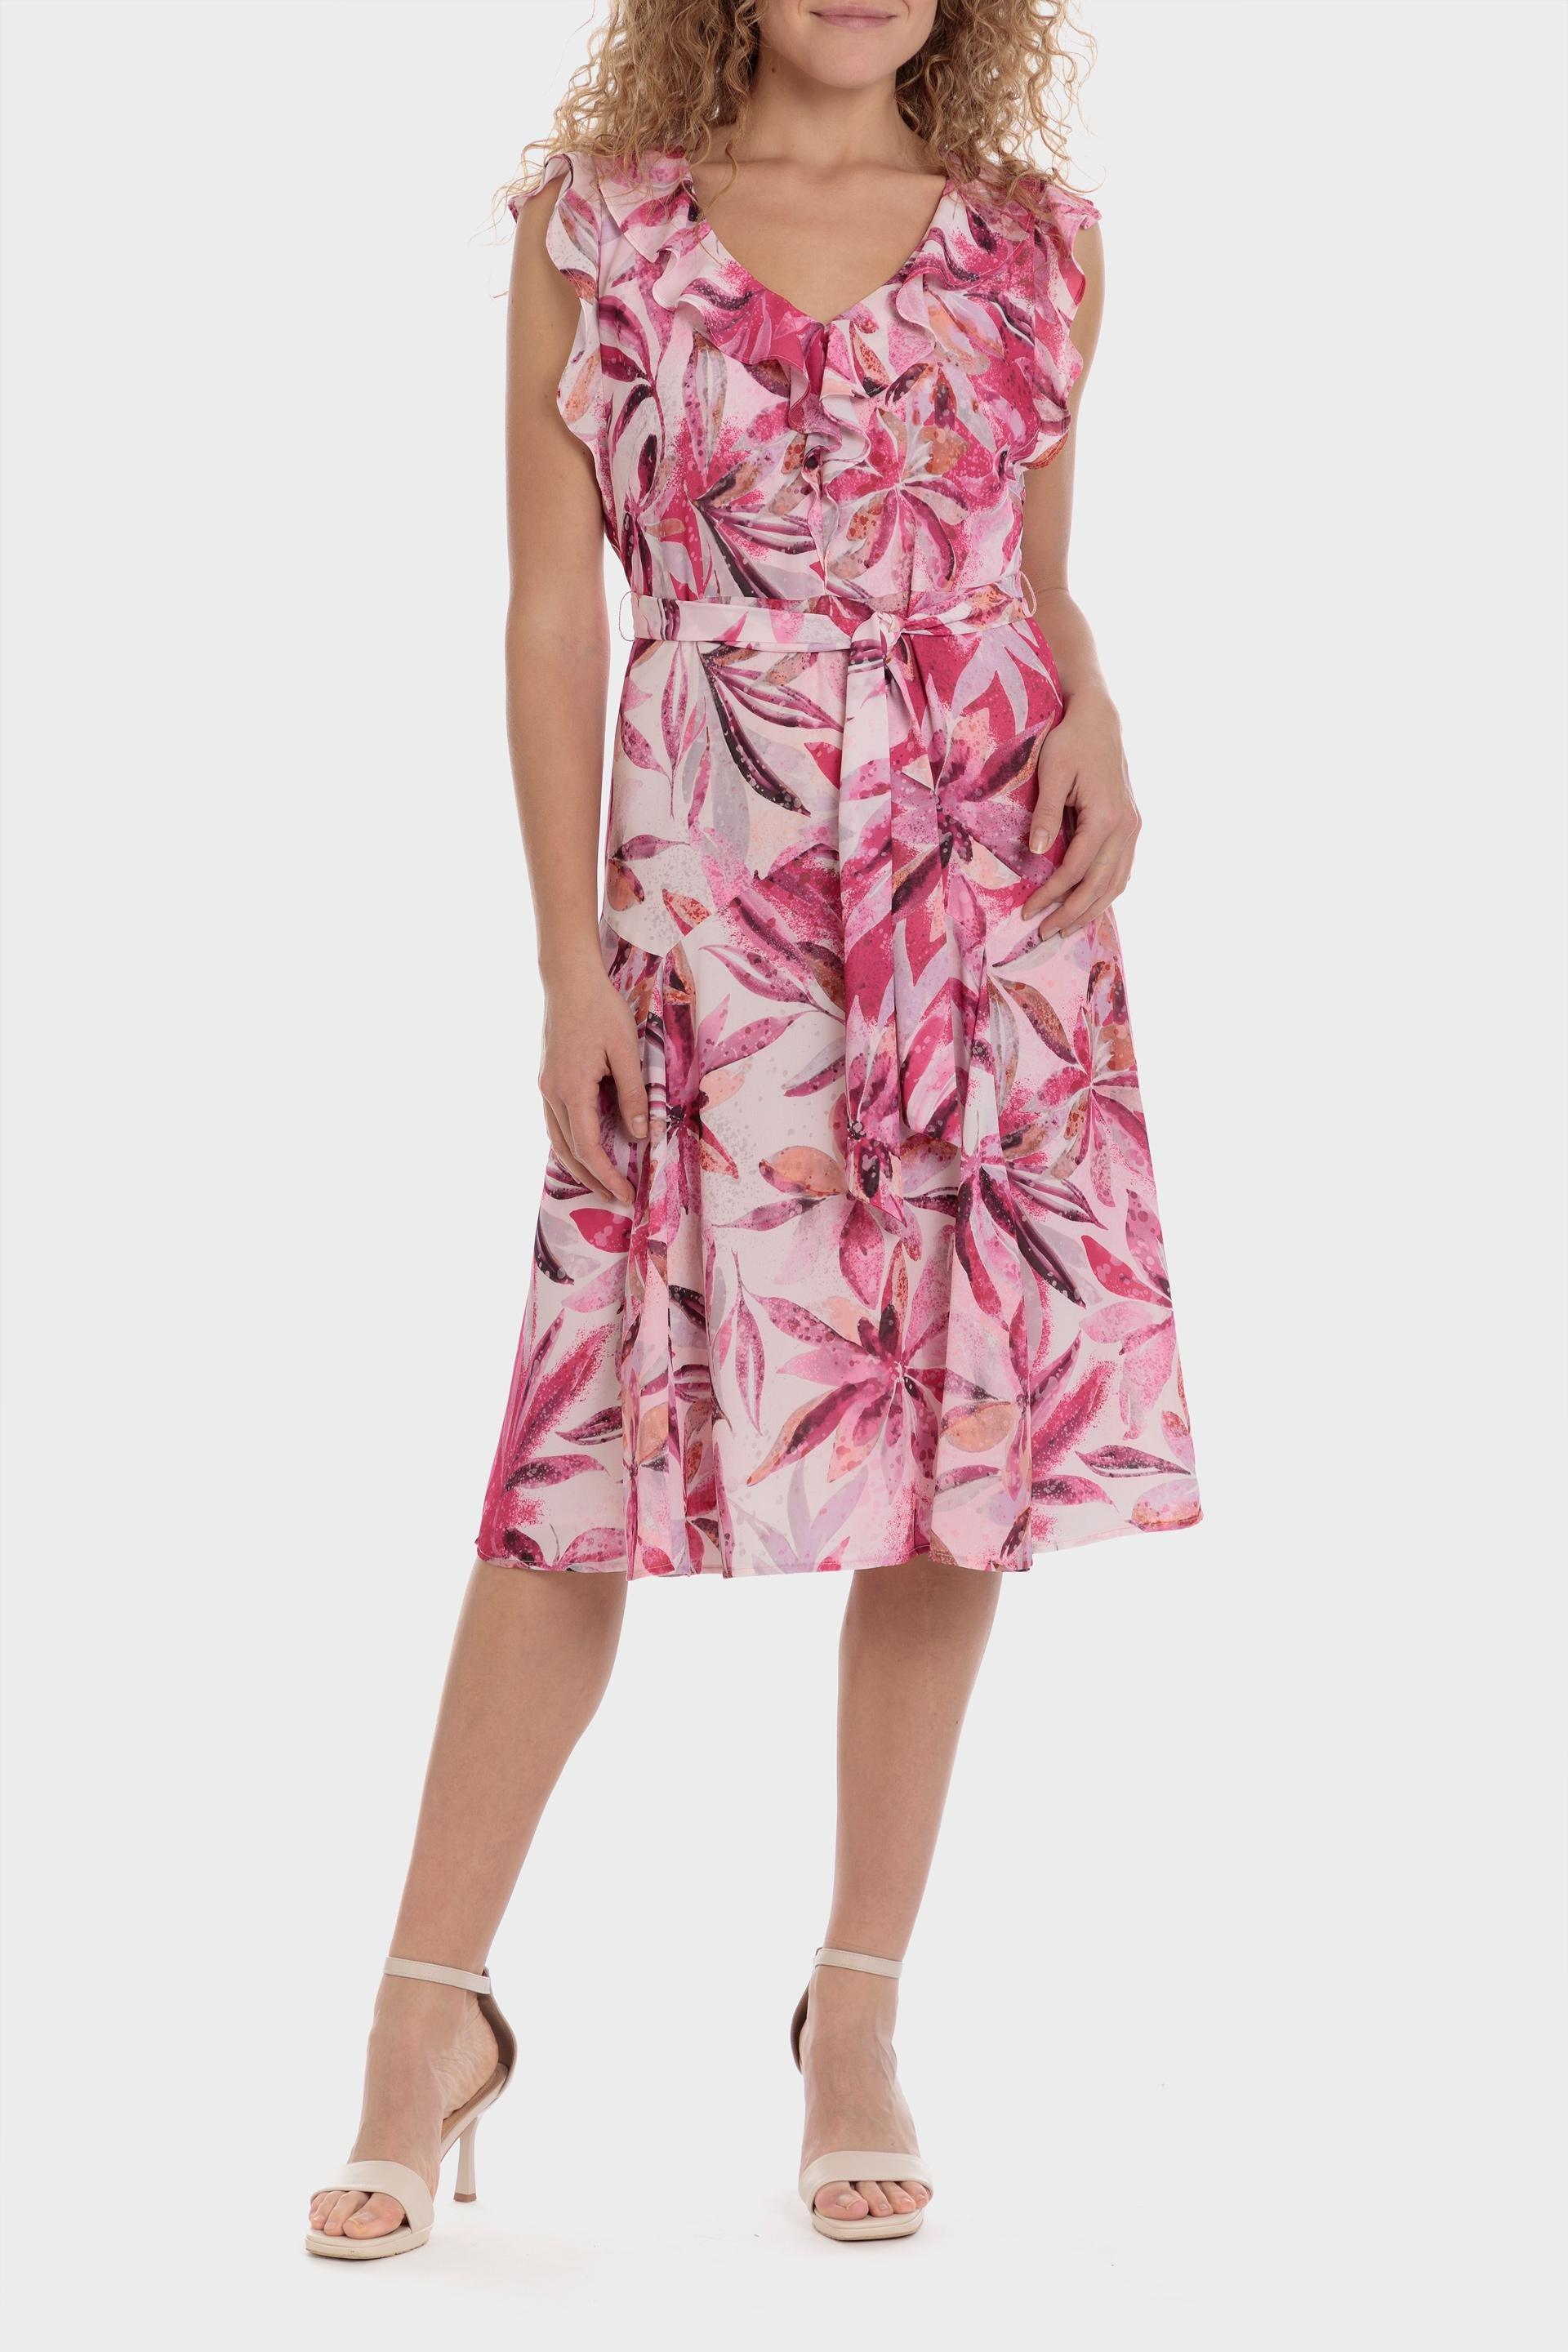 Punt Roma - Floral print dress